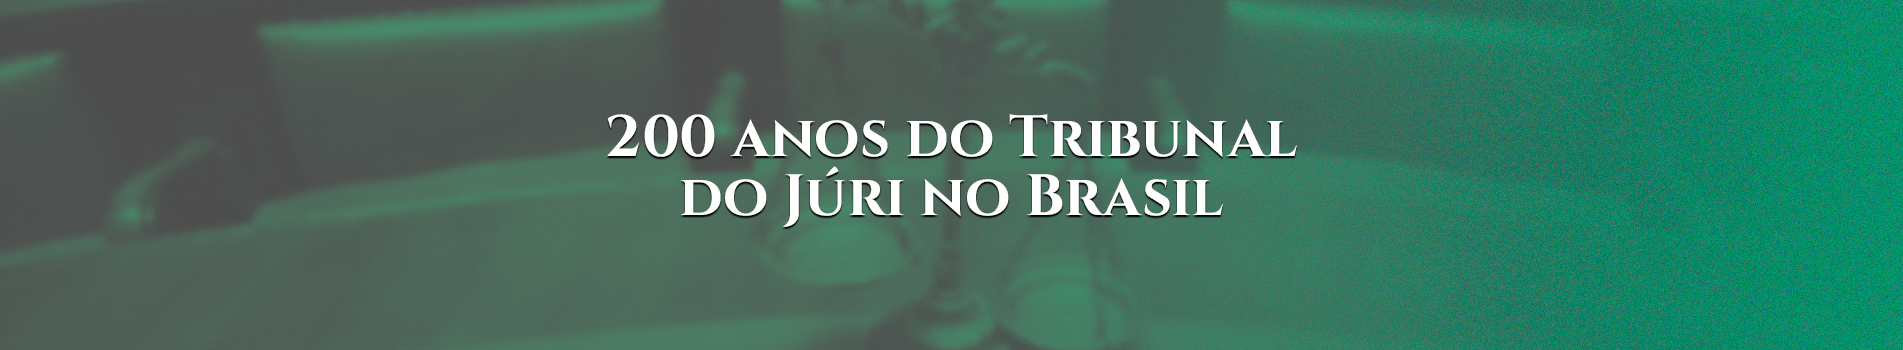 200 anos do Tribunal do Júri no Brasil